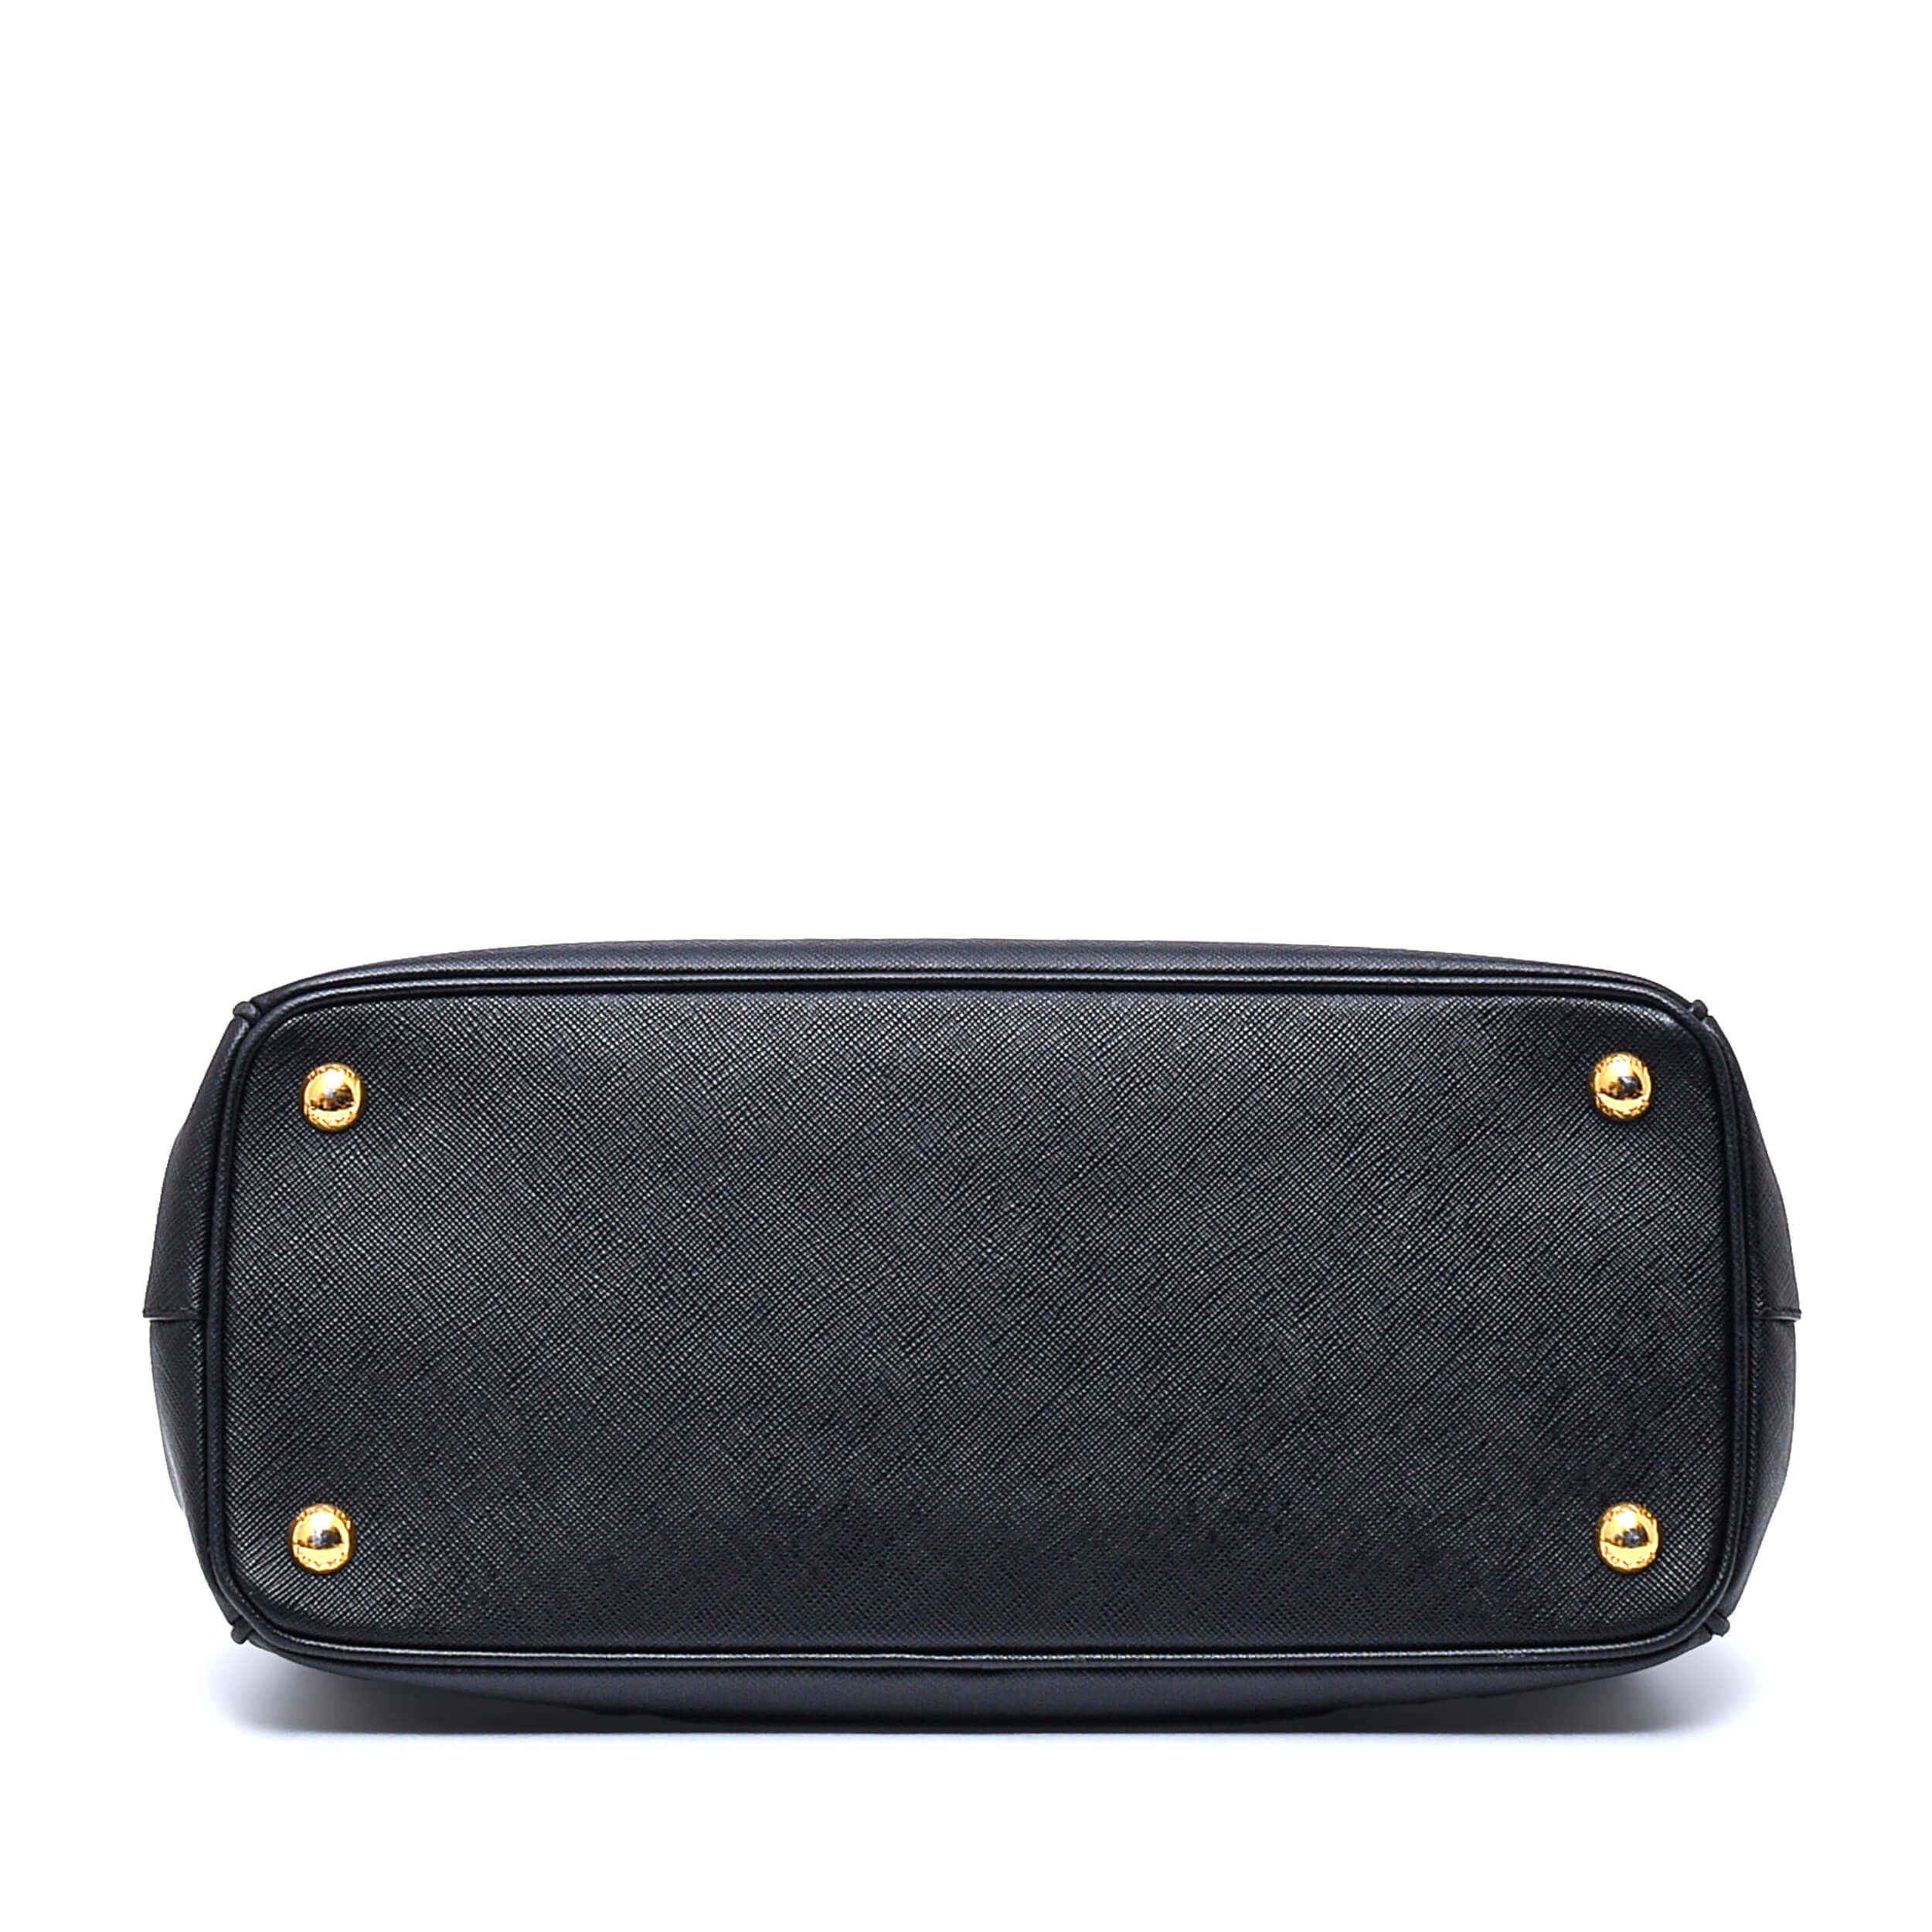 Prada - Black Saffiano Leather Double Zip Small Bag